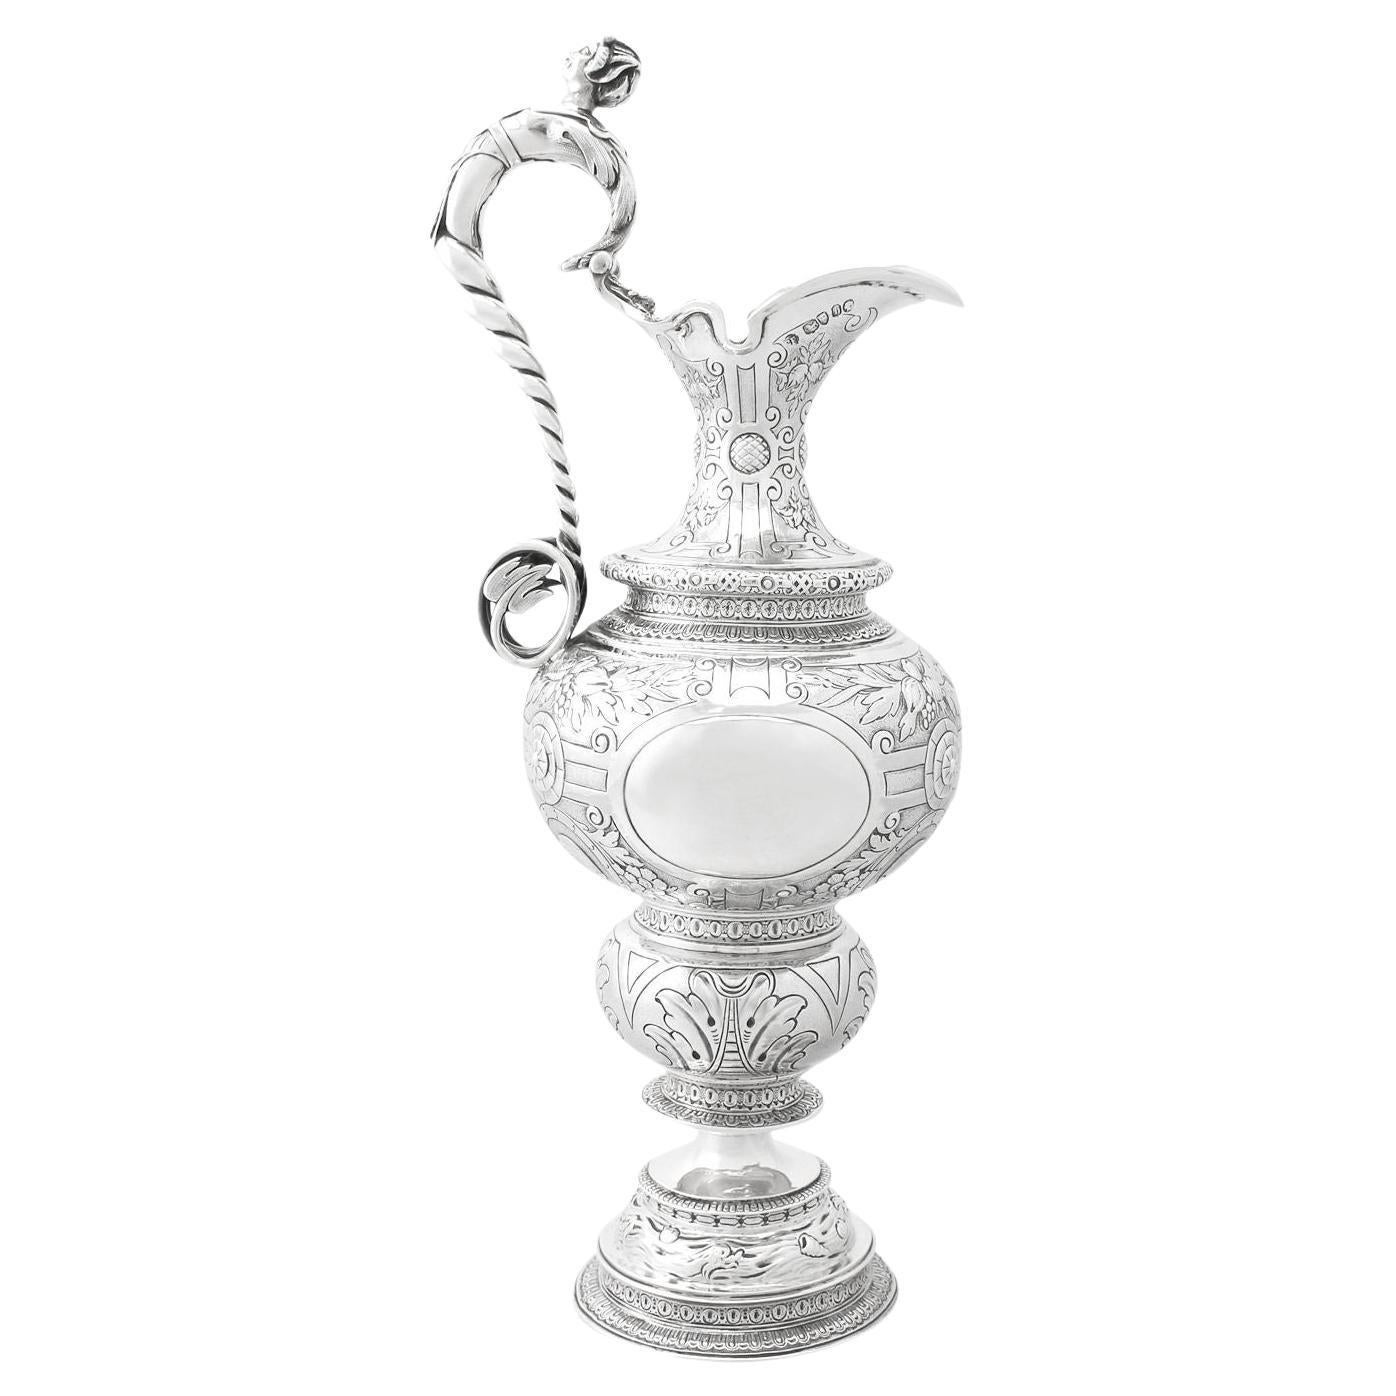 Antique Victorian 1860s English Sterling Silver Claret Jug